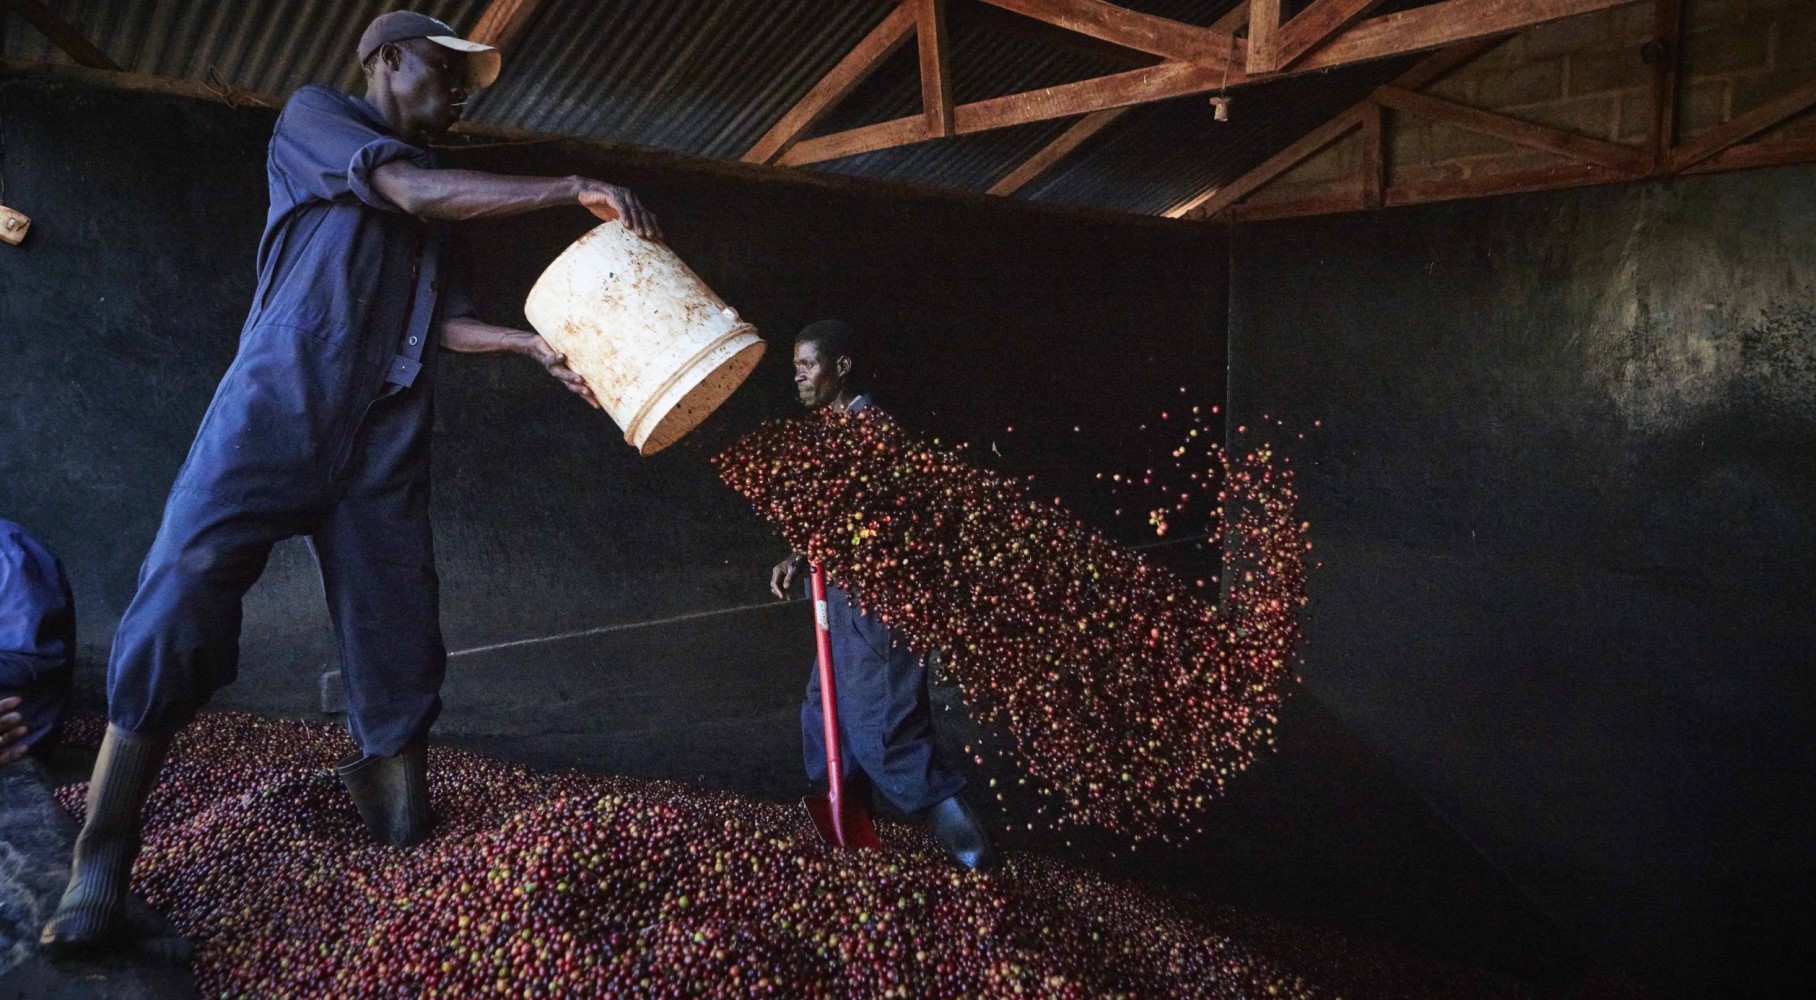 A farm worker standing on freshly picked coffee cherries throwing a bucket of coffee cherries